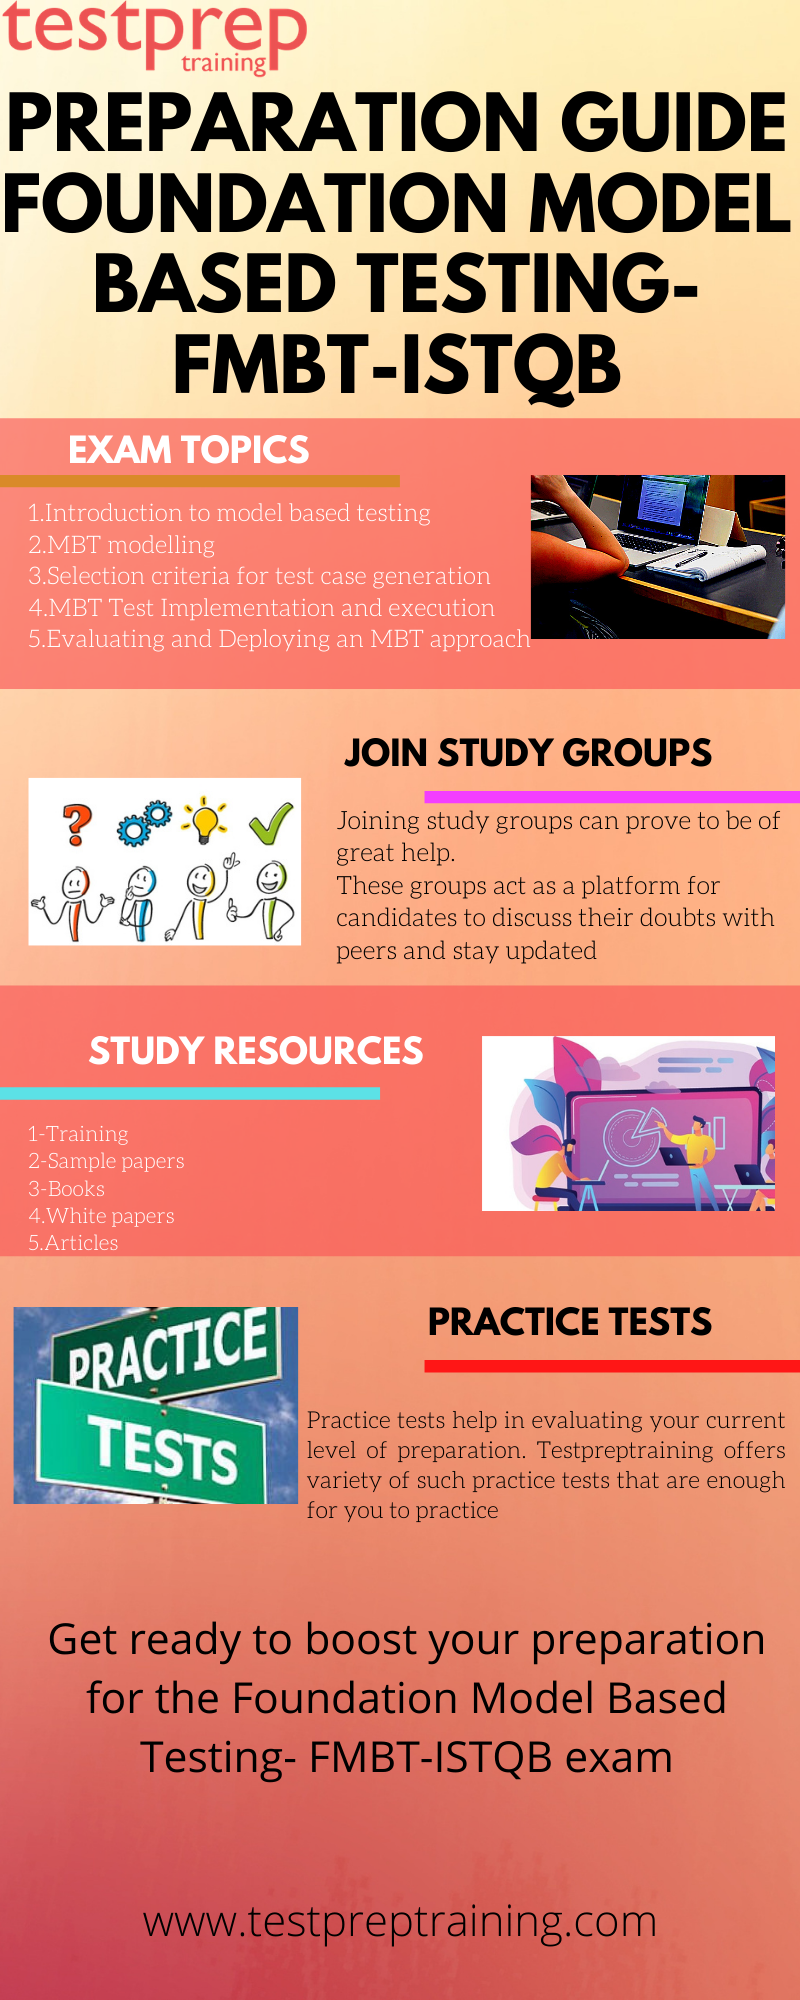 Foundation Model-Based Testing-FMBT-ISTQB Exam Study Guide